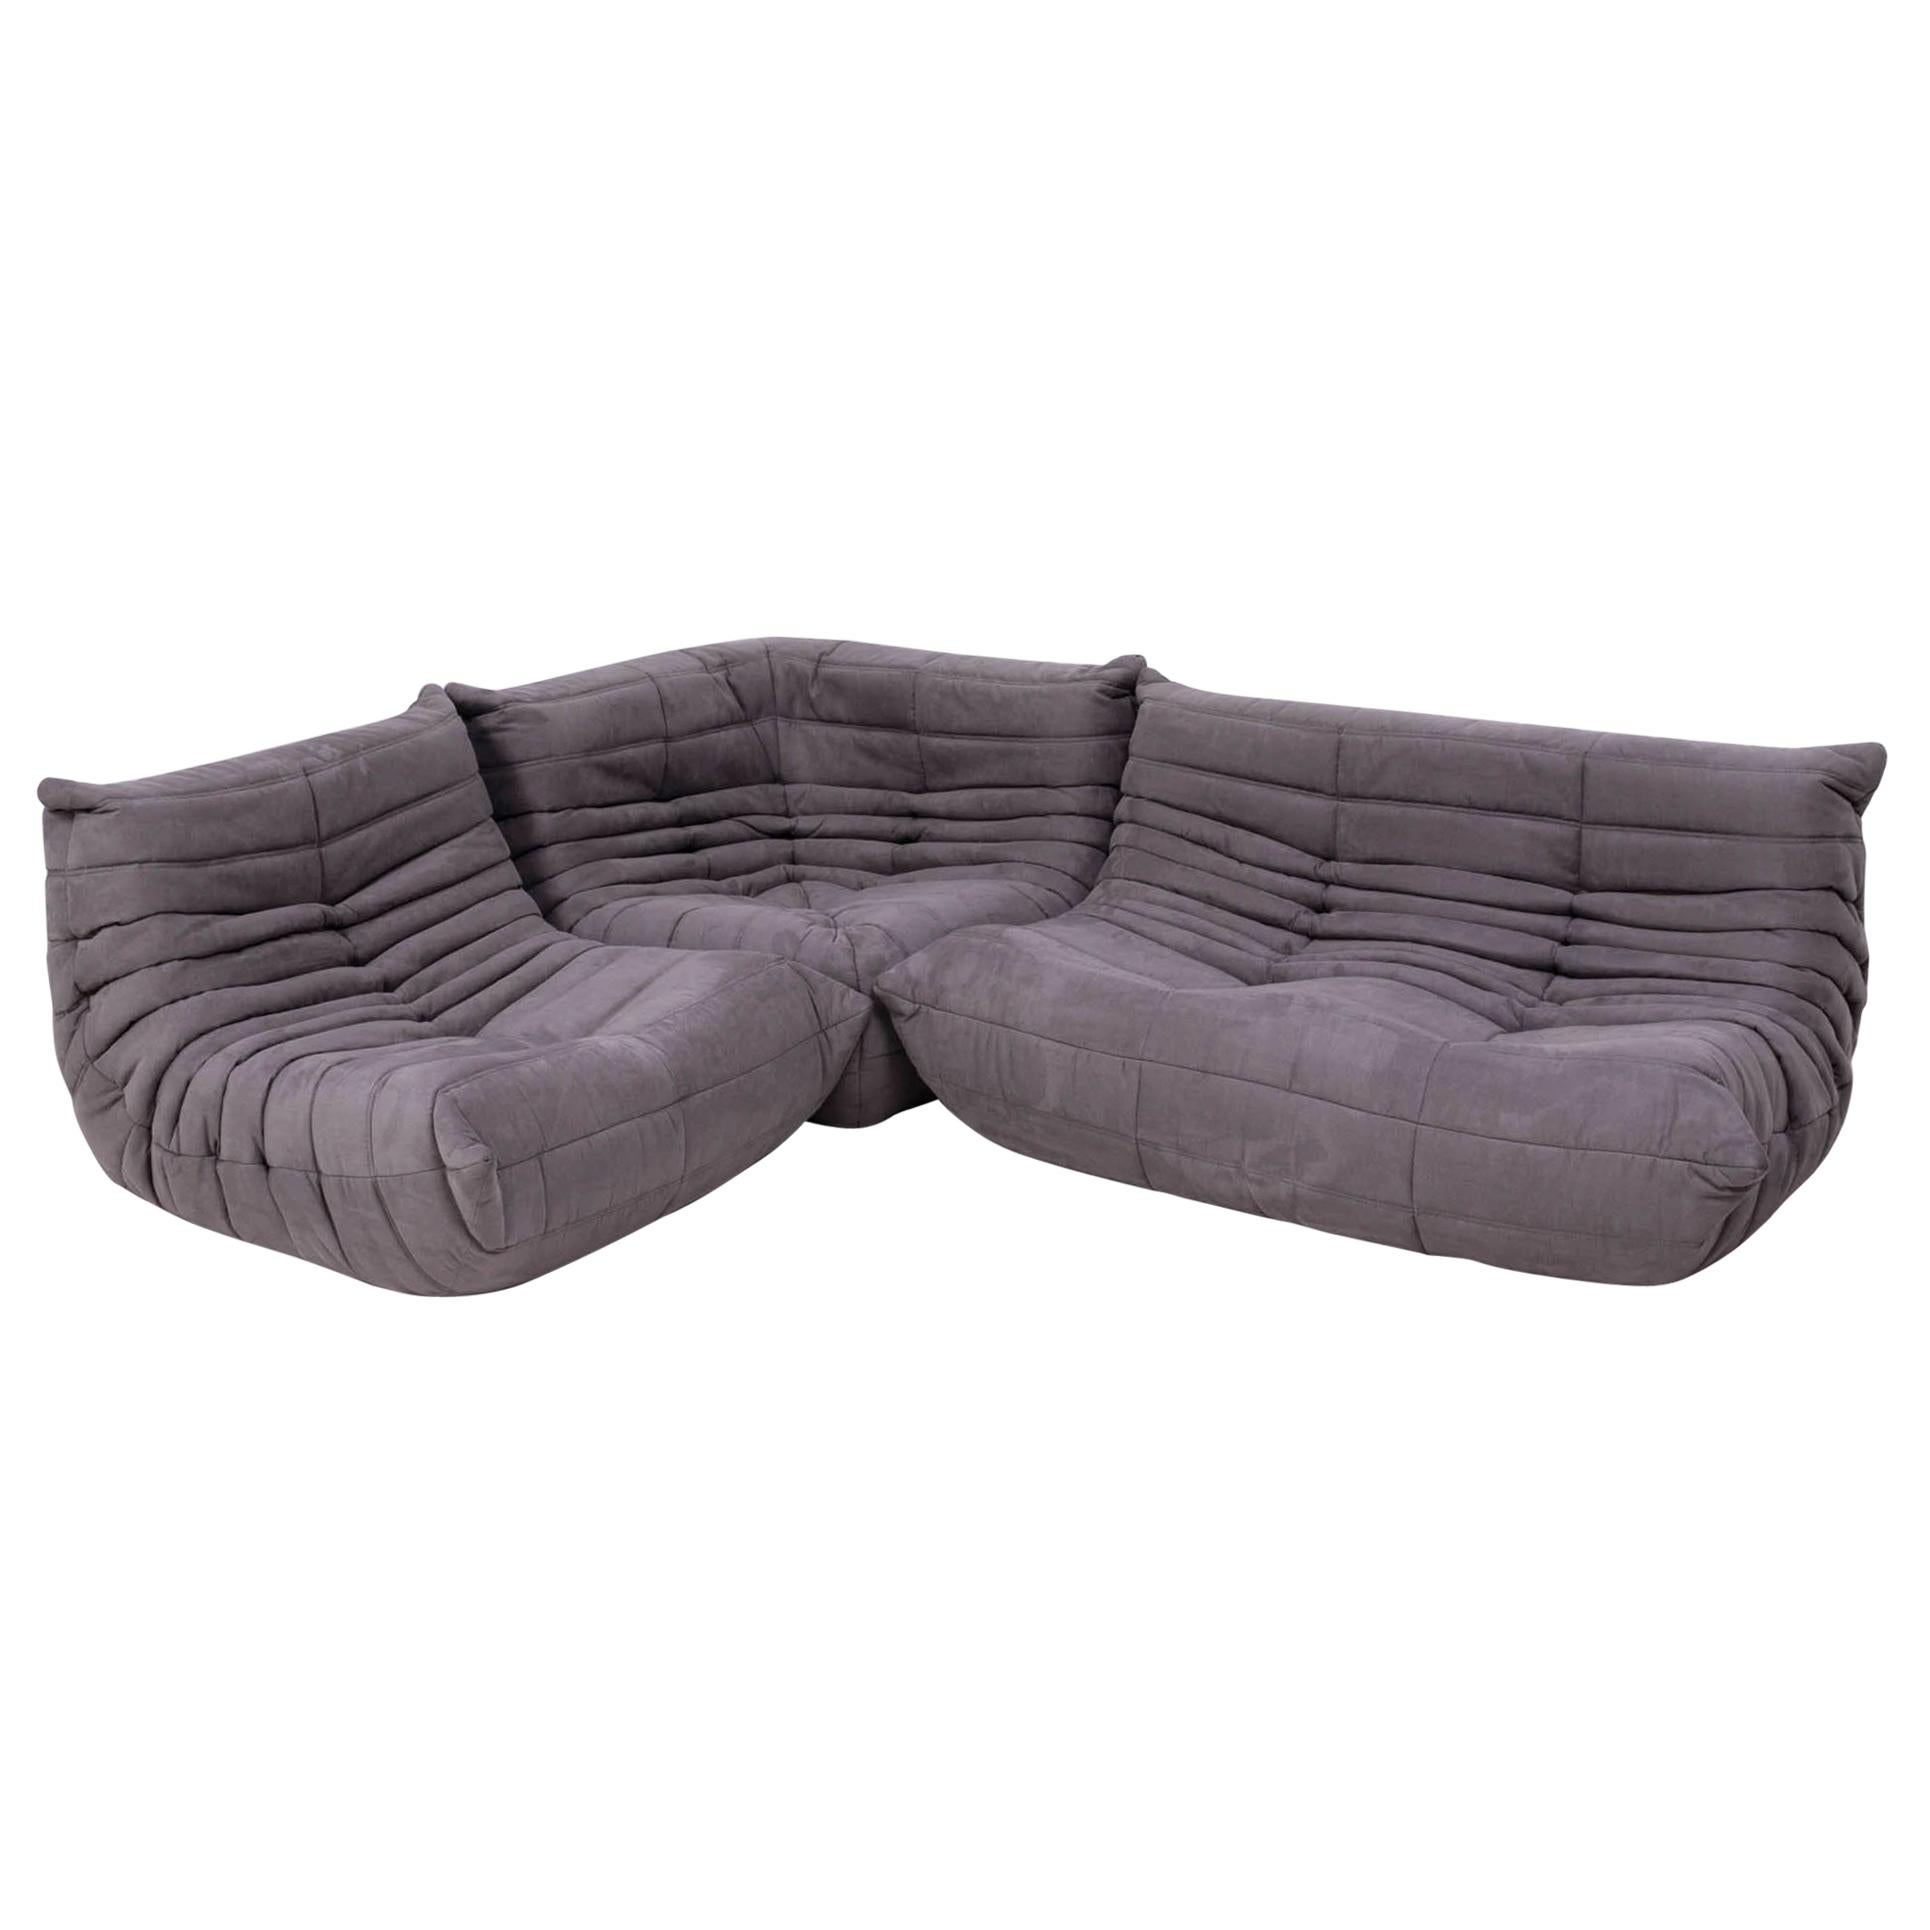 Togo Grey Modular Sofa by Michel Ducaroy for Ligne Roset, Set of 3